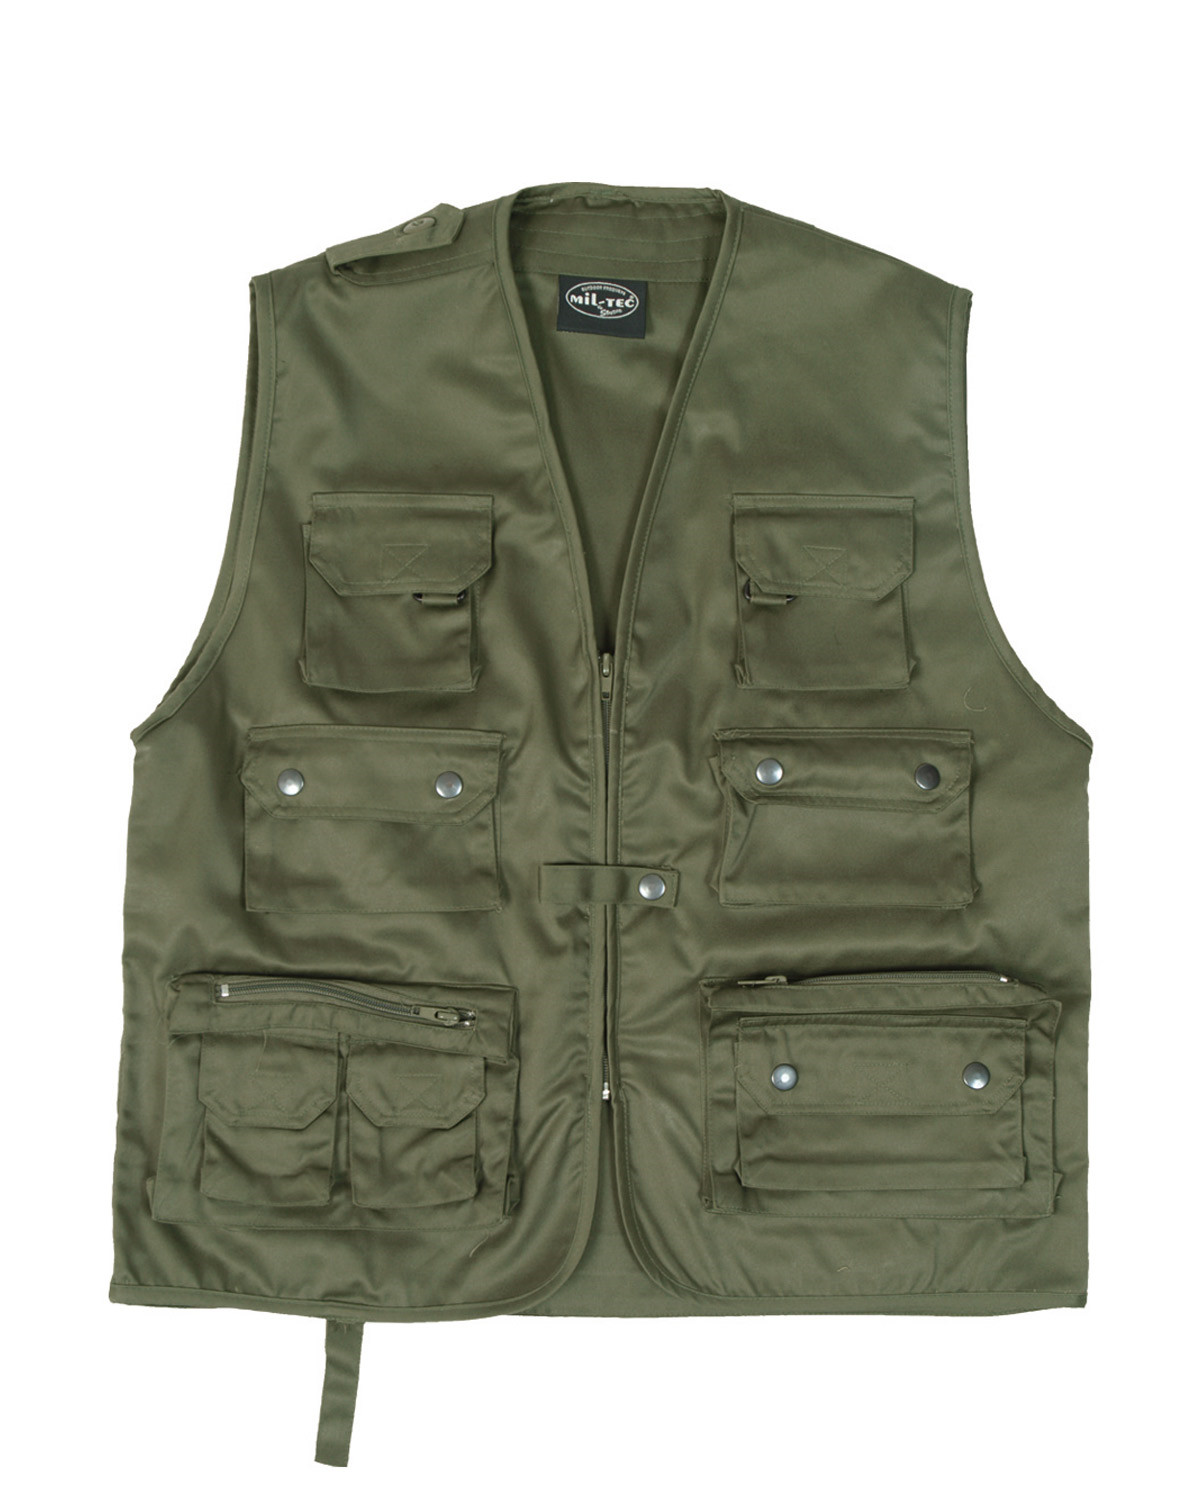 5: Mil-Tec Hunters Vest (Oliven, M)